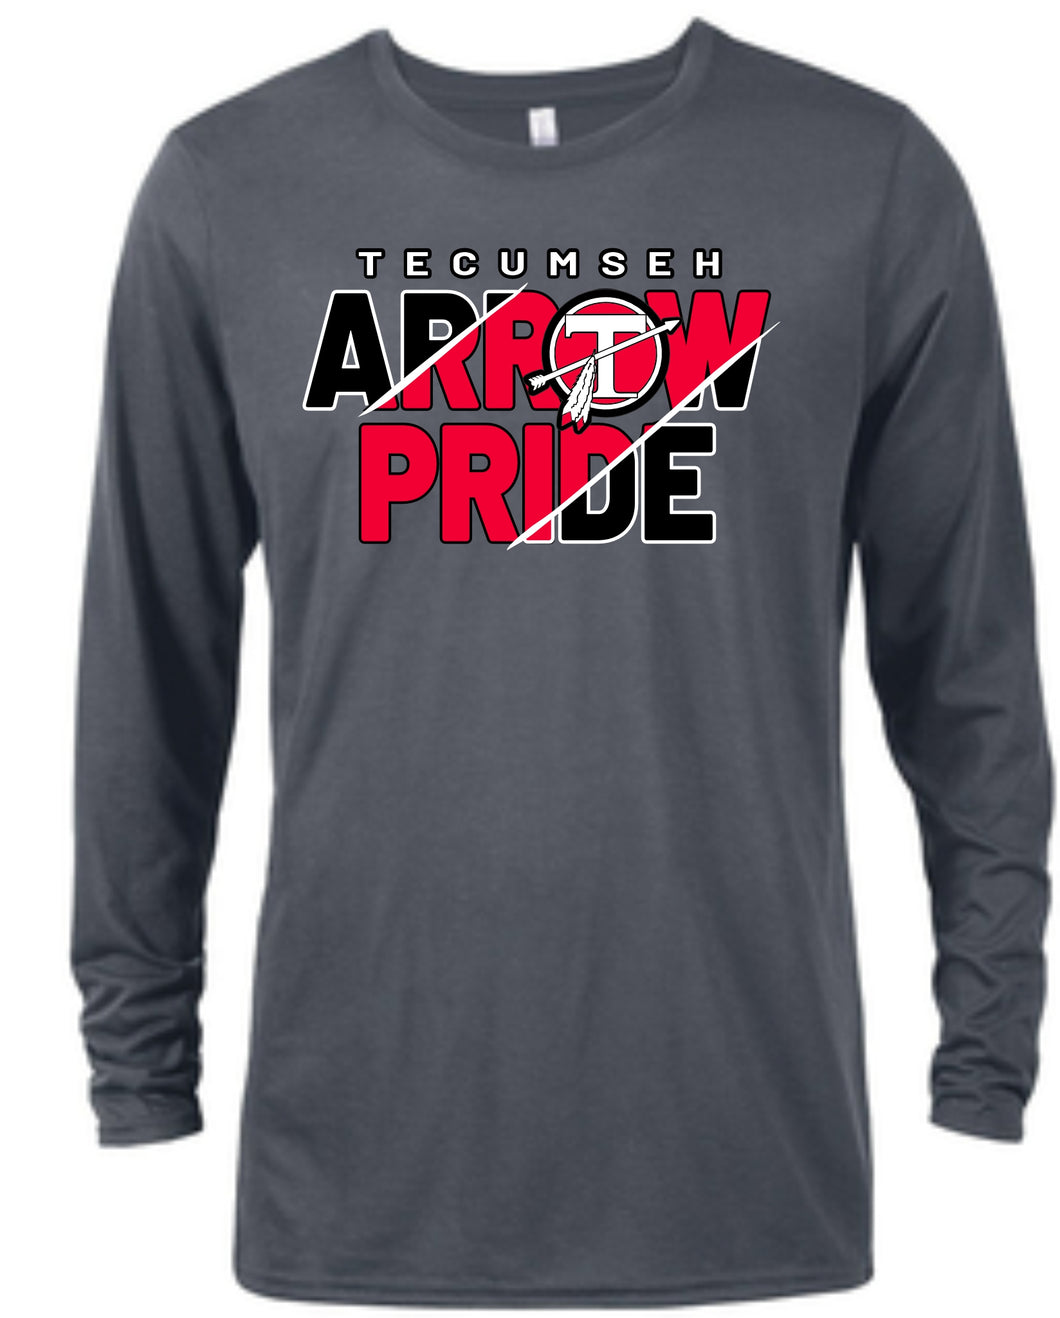 Arrow Pride Swipe Long Sleeve Tshirt Charcoal